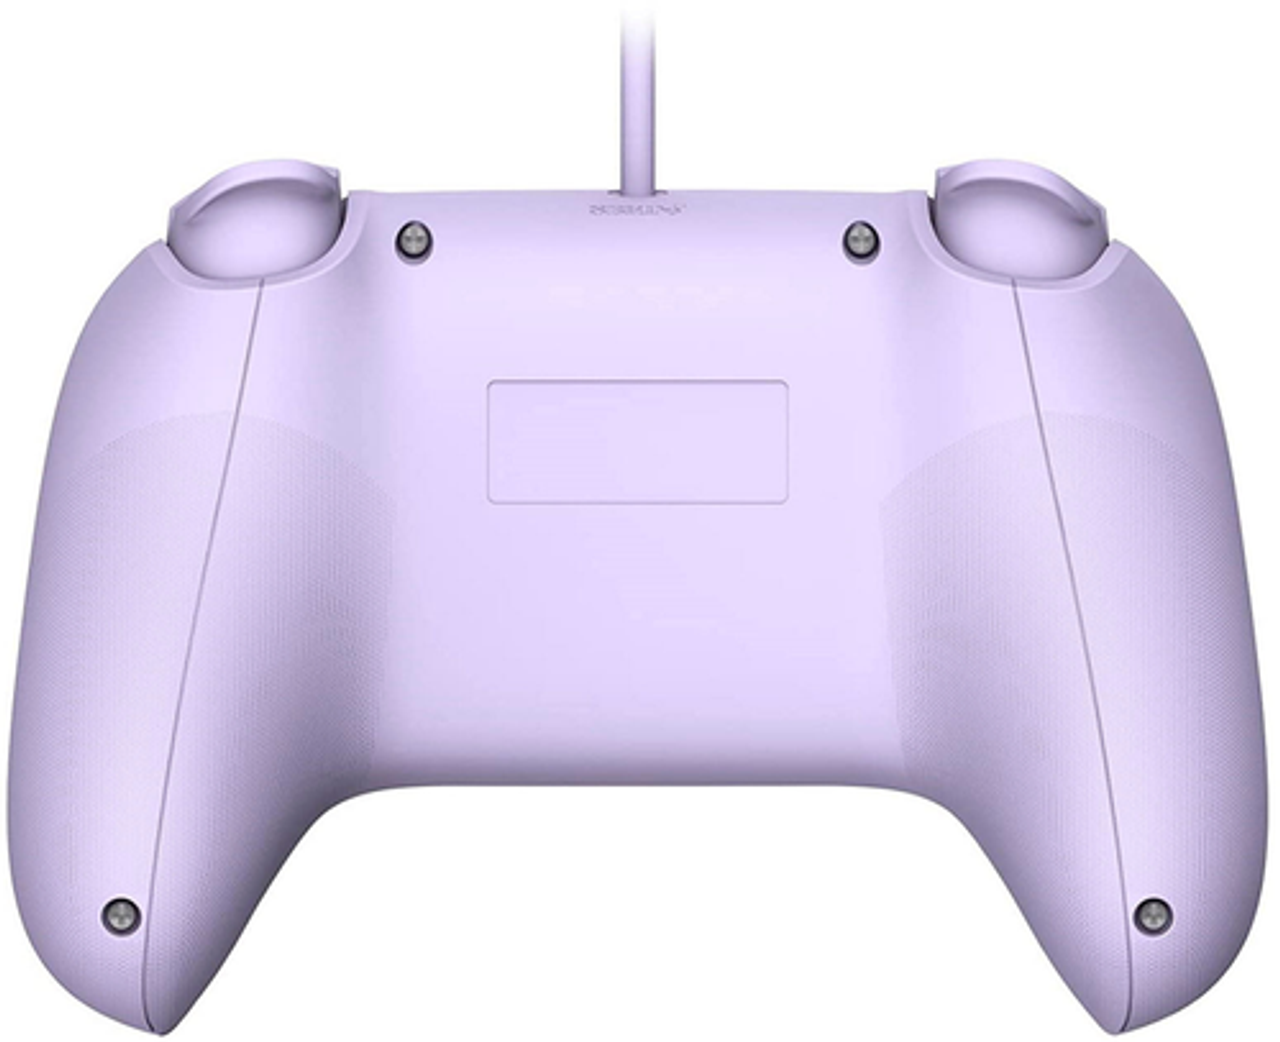 8BitDo - Ultimate C 2.4G Wireless Controller - Lilac Purple